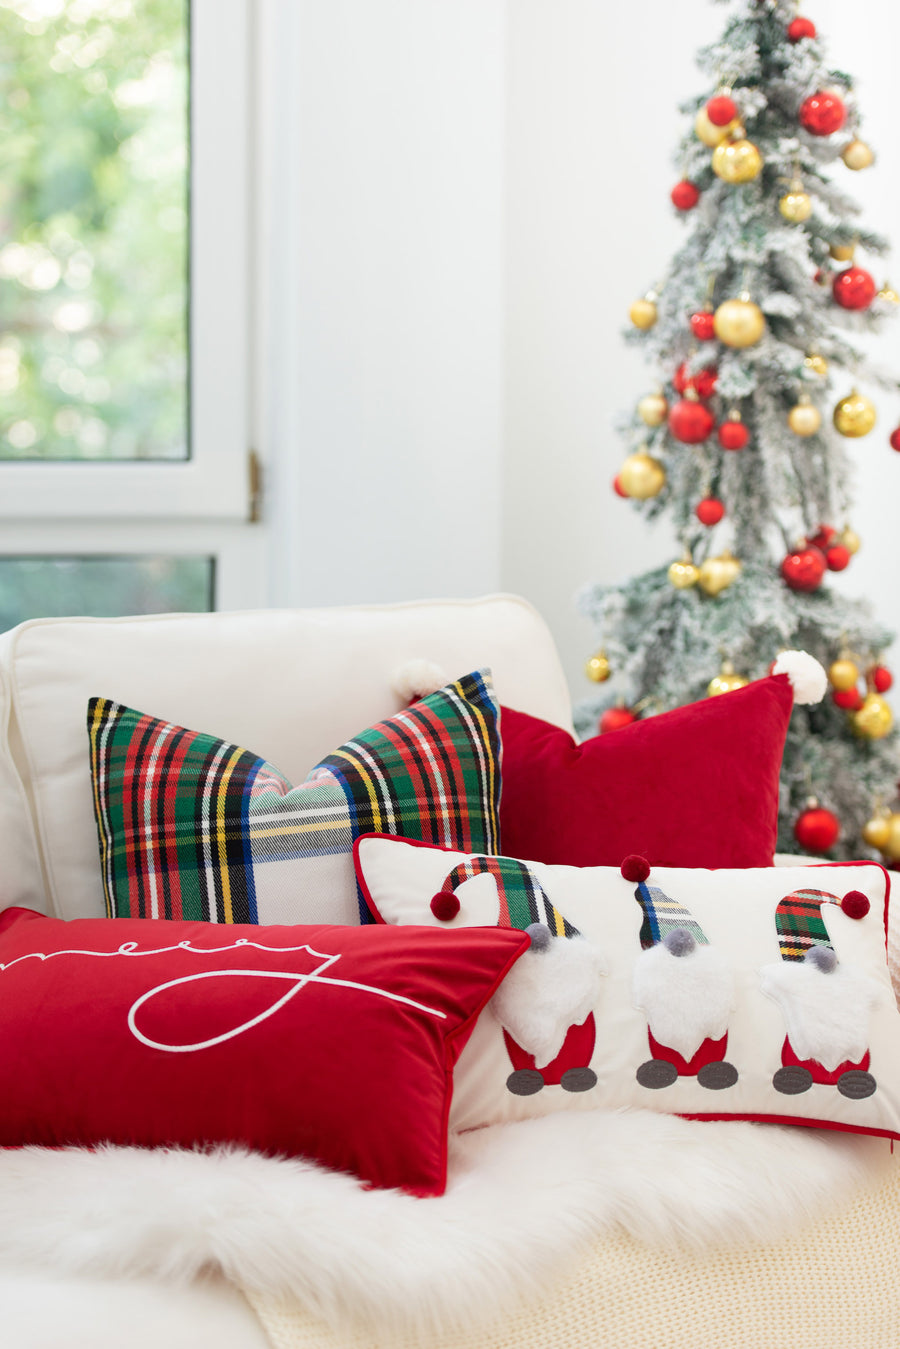 Hofdeco Premium Holiday Lumbar Pillow Cover, Christmas Gnomes, Red, 12